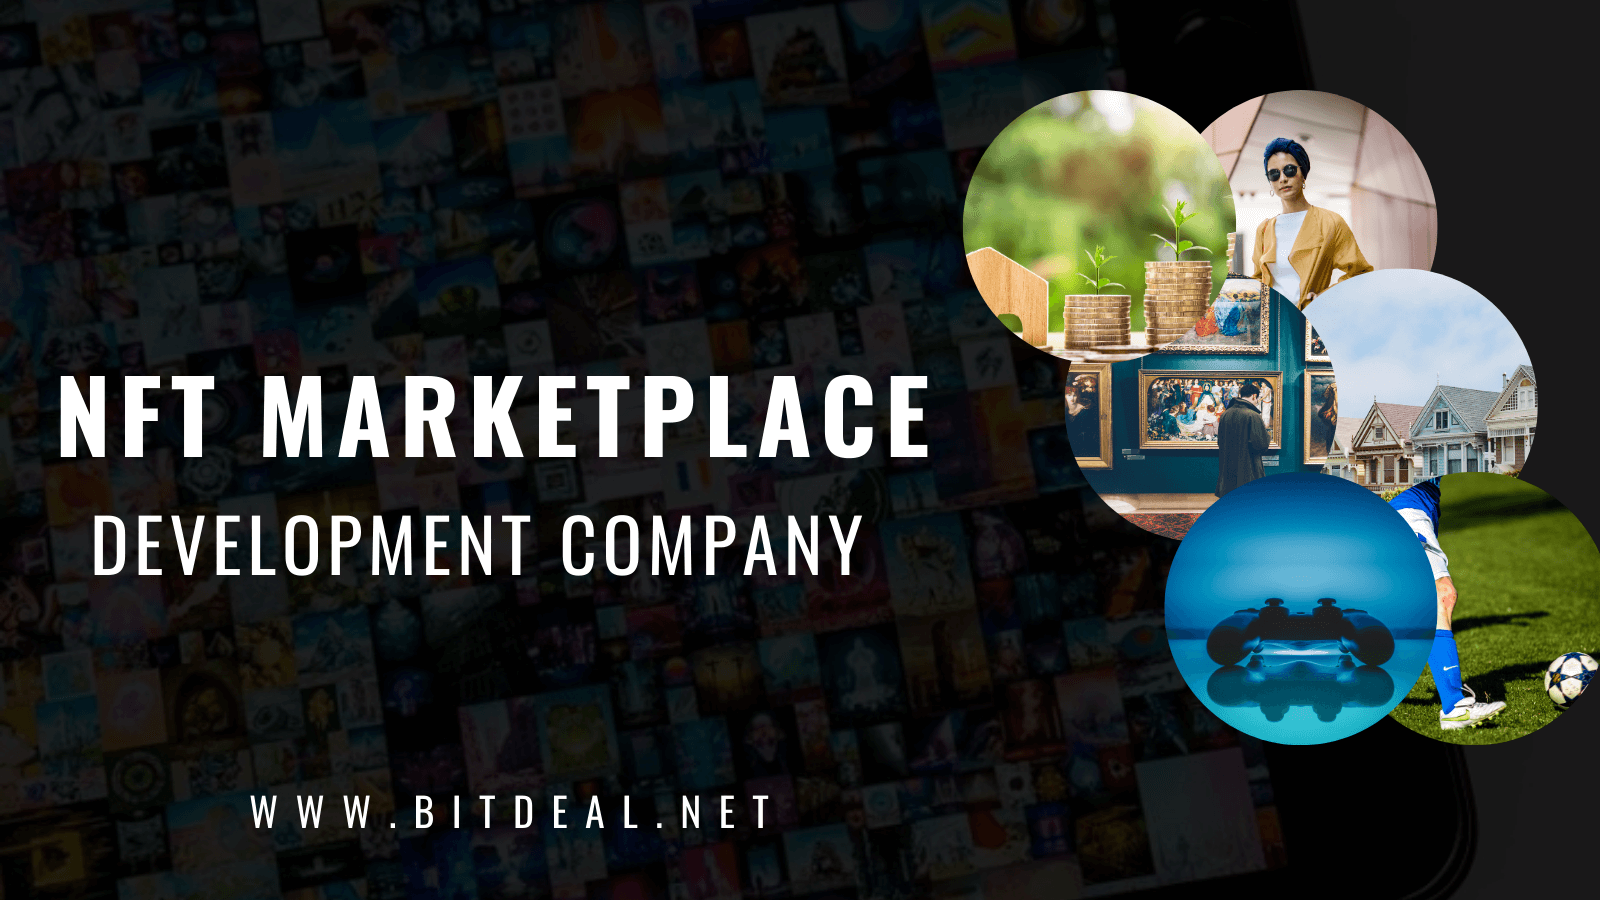 NFT Marketplace Development Company